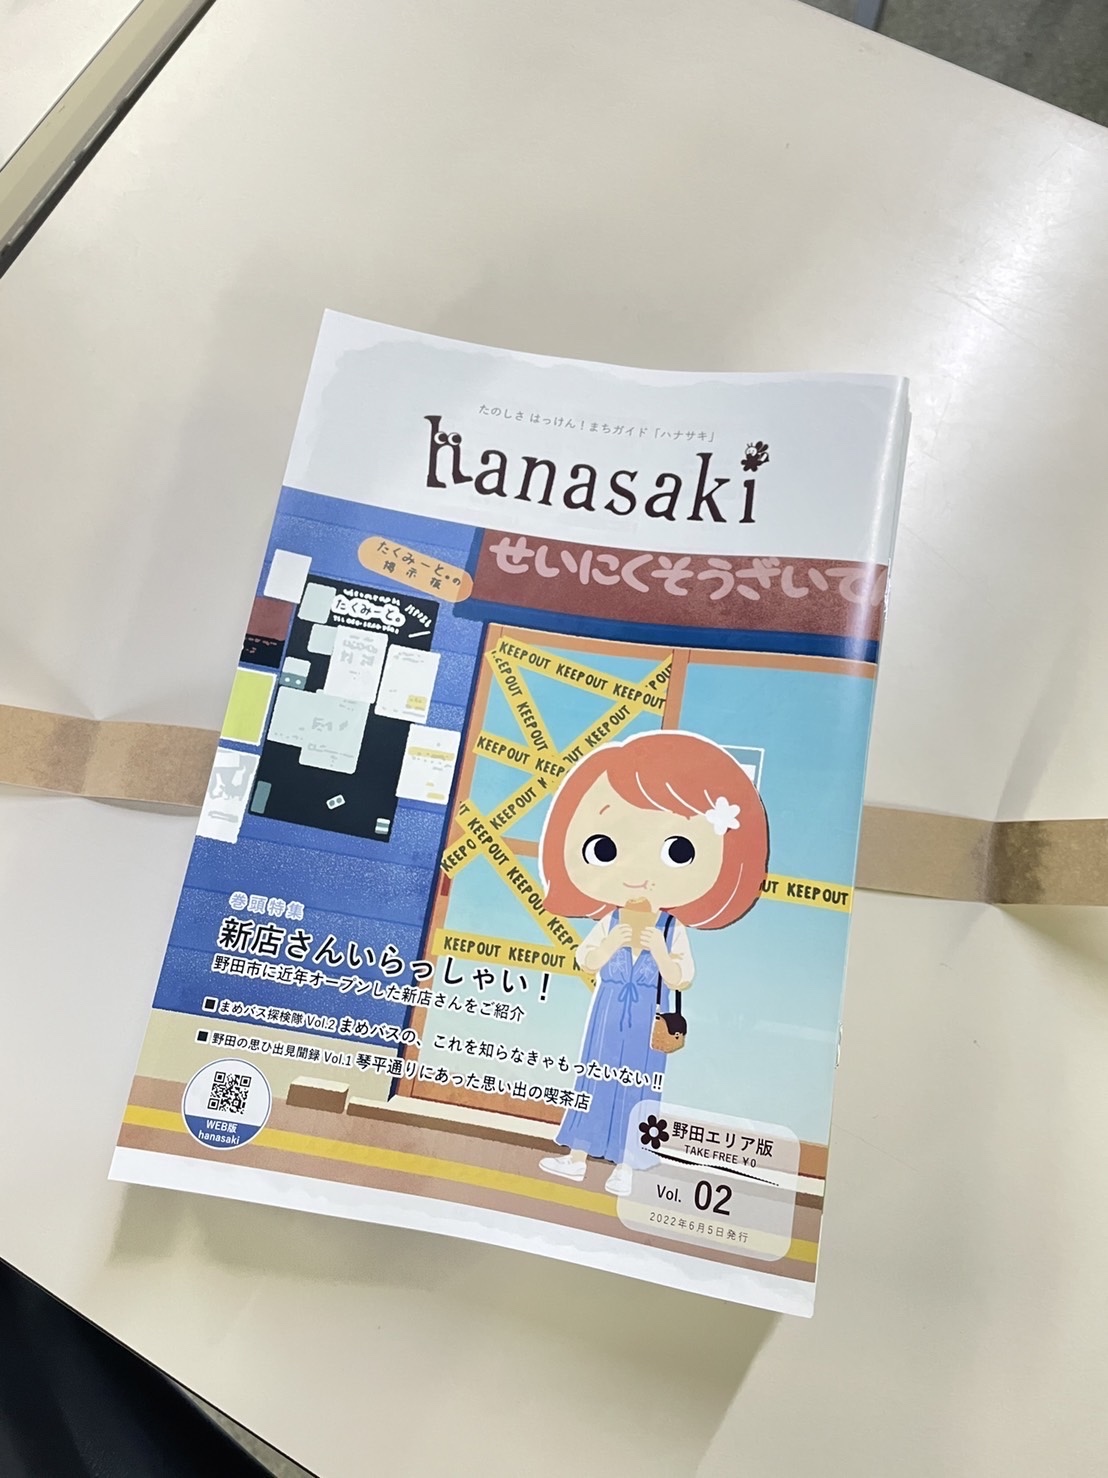 hanasaki Vol2が発刊されました！